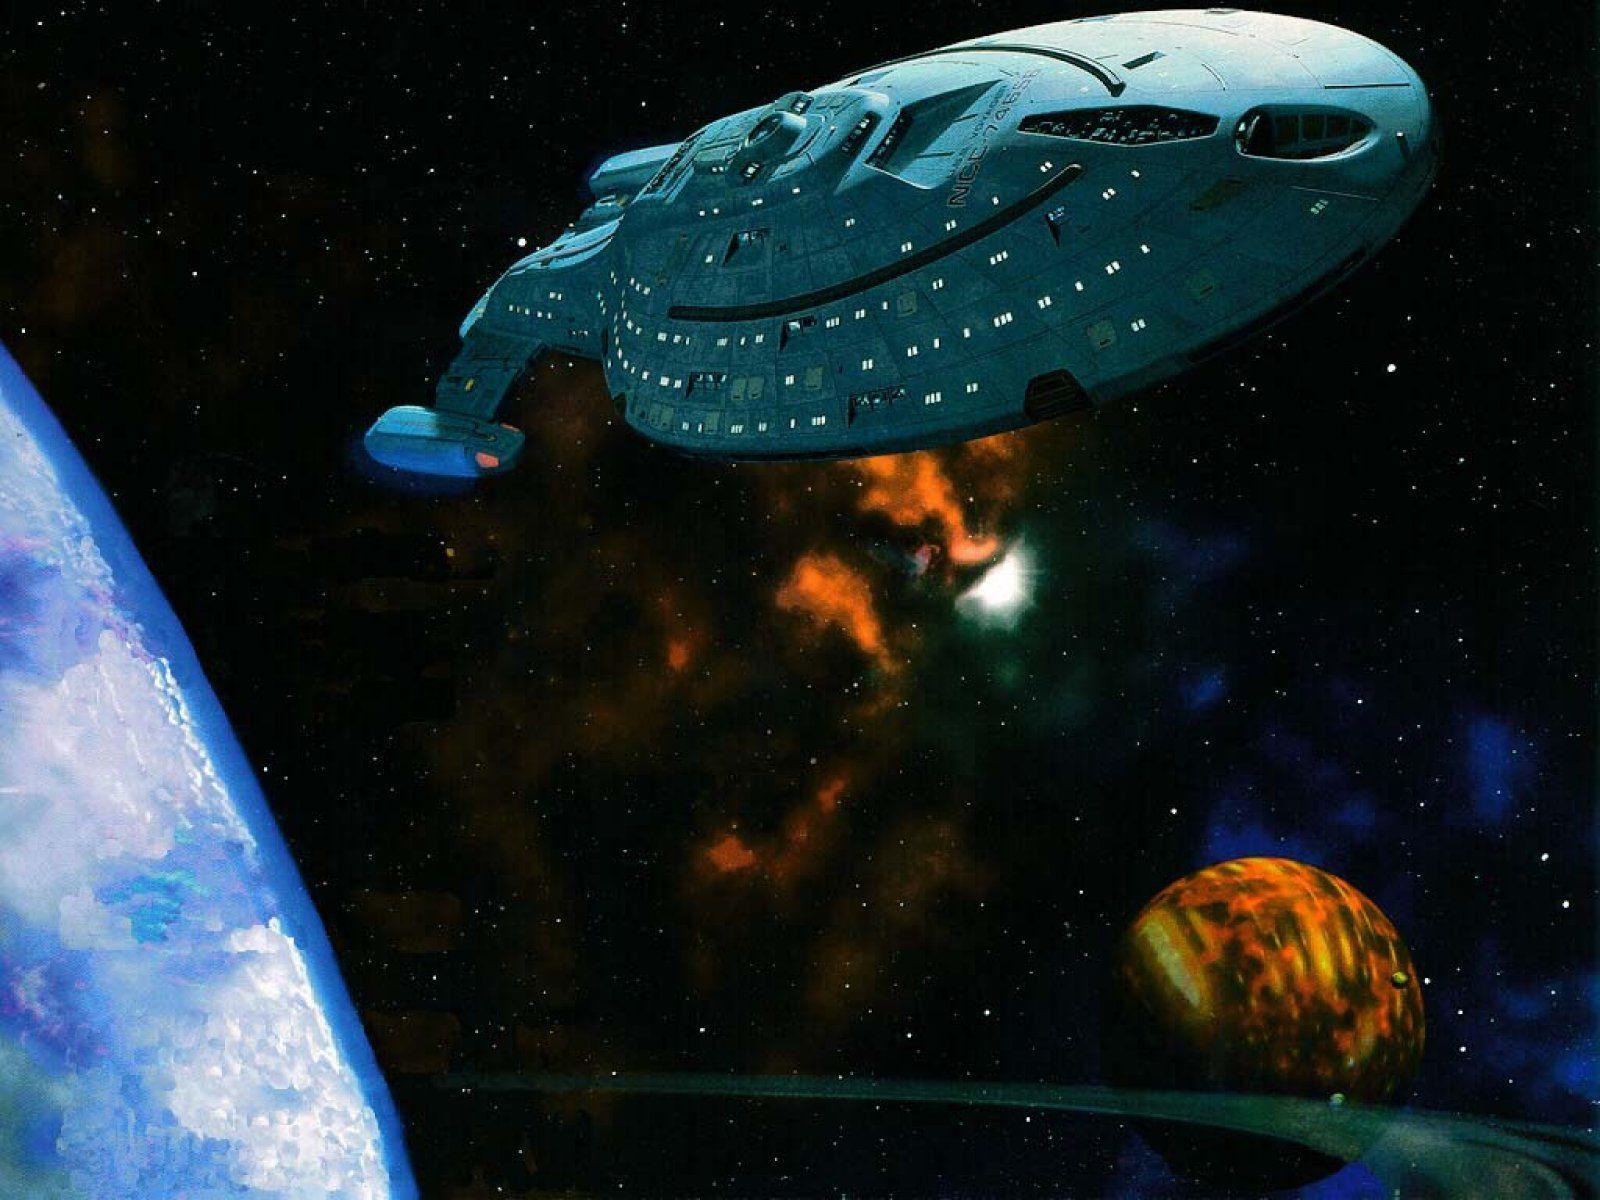 Star Trek USS Voyager leaving orbit Star Trek computer